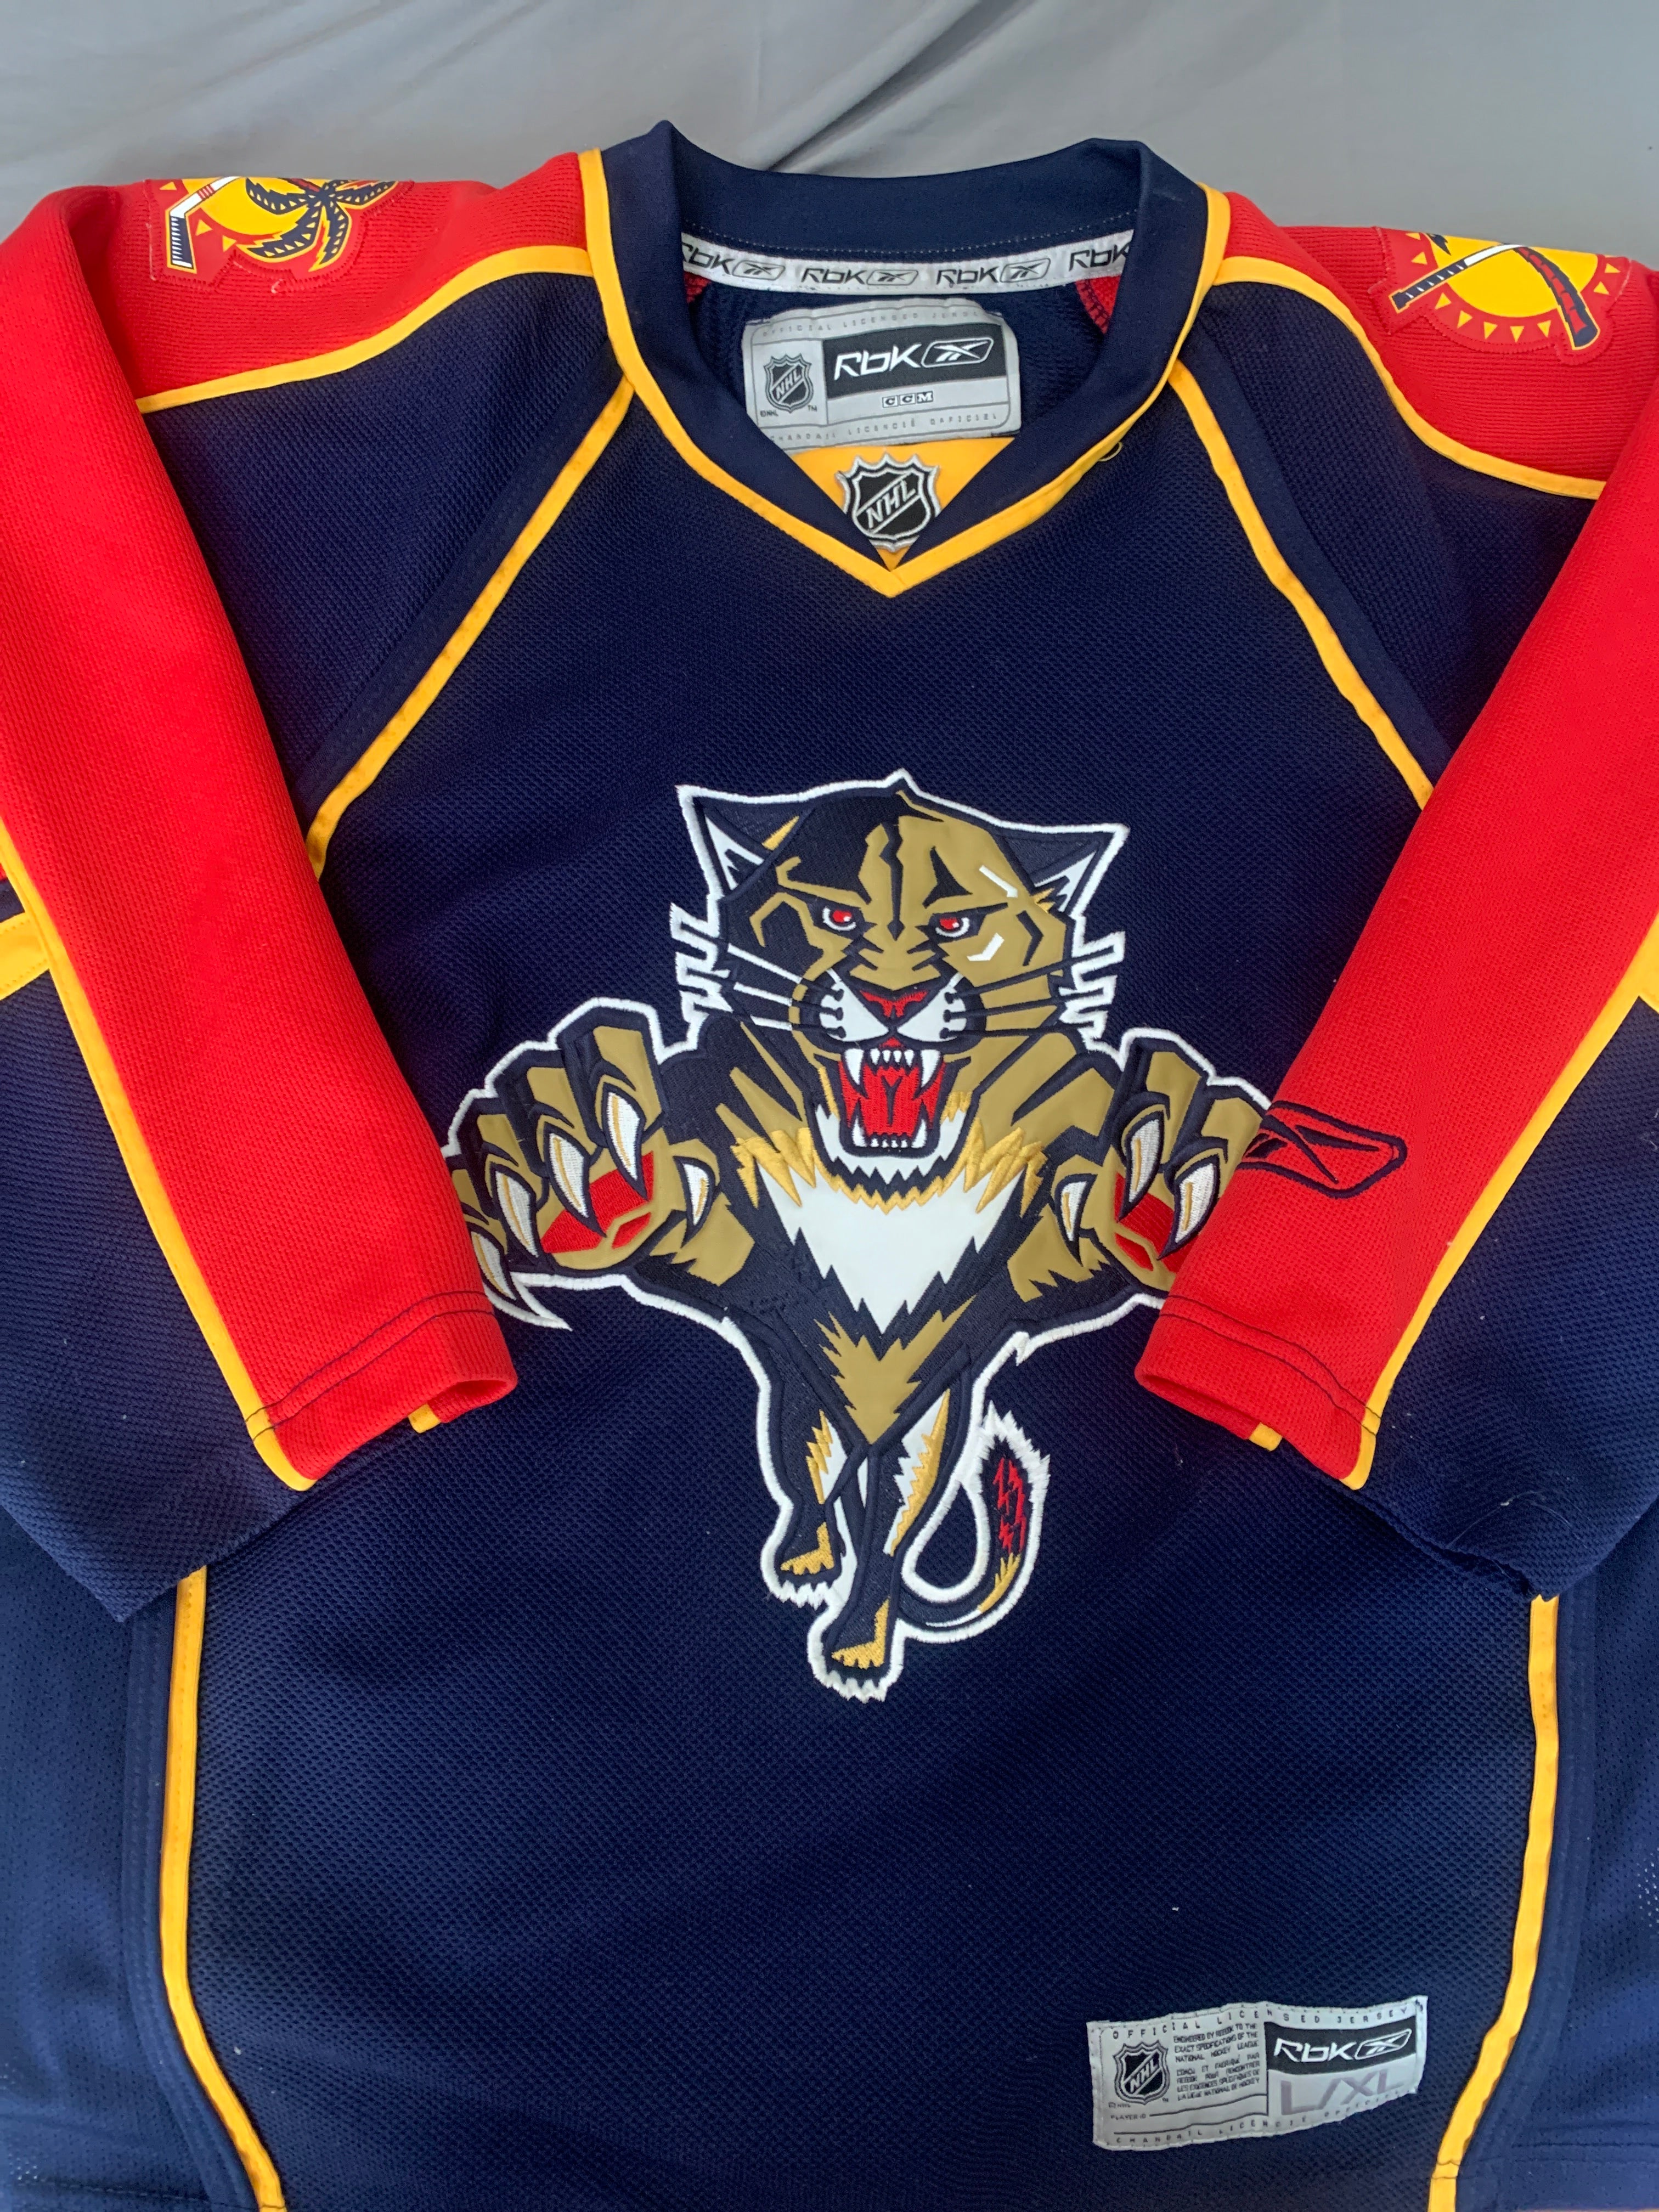 S) Florida Panthers Reebok Jersey (#16)